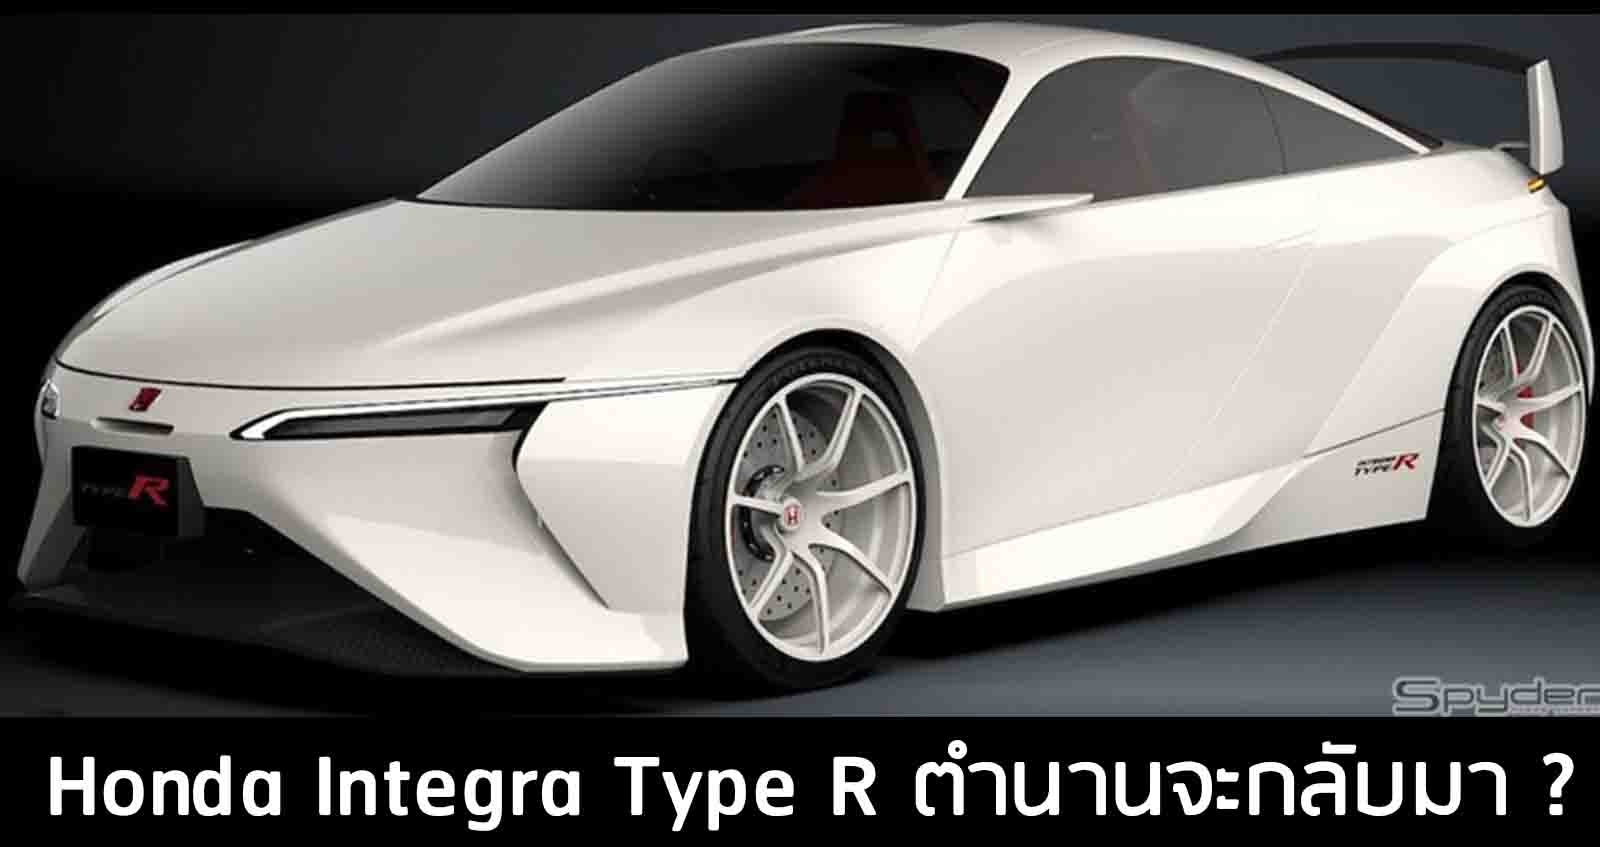 Honda Integra Type R คูเป้ 2 ประตู ตำนาน จะกลับมา ?